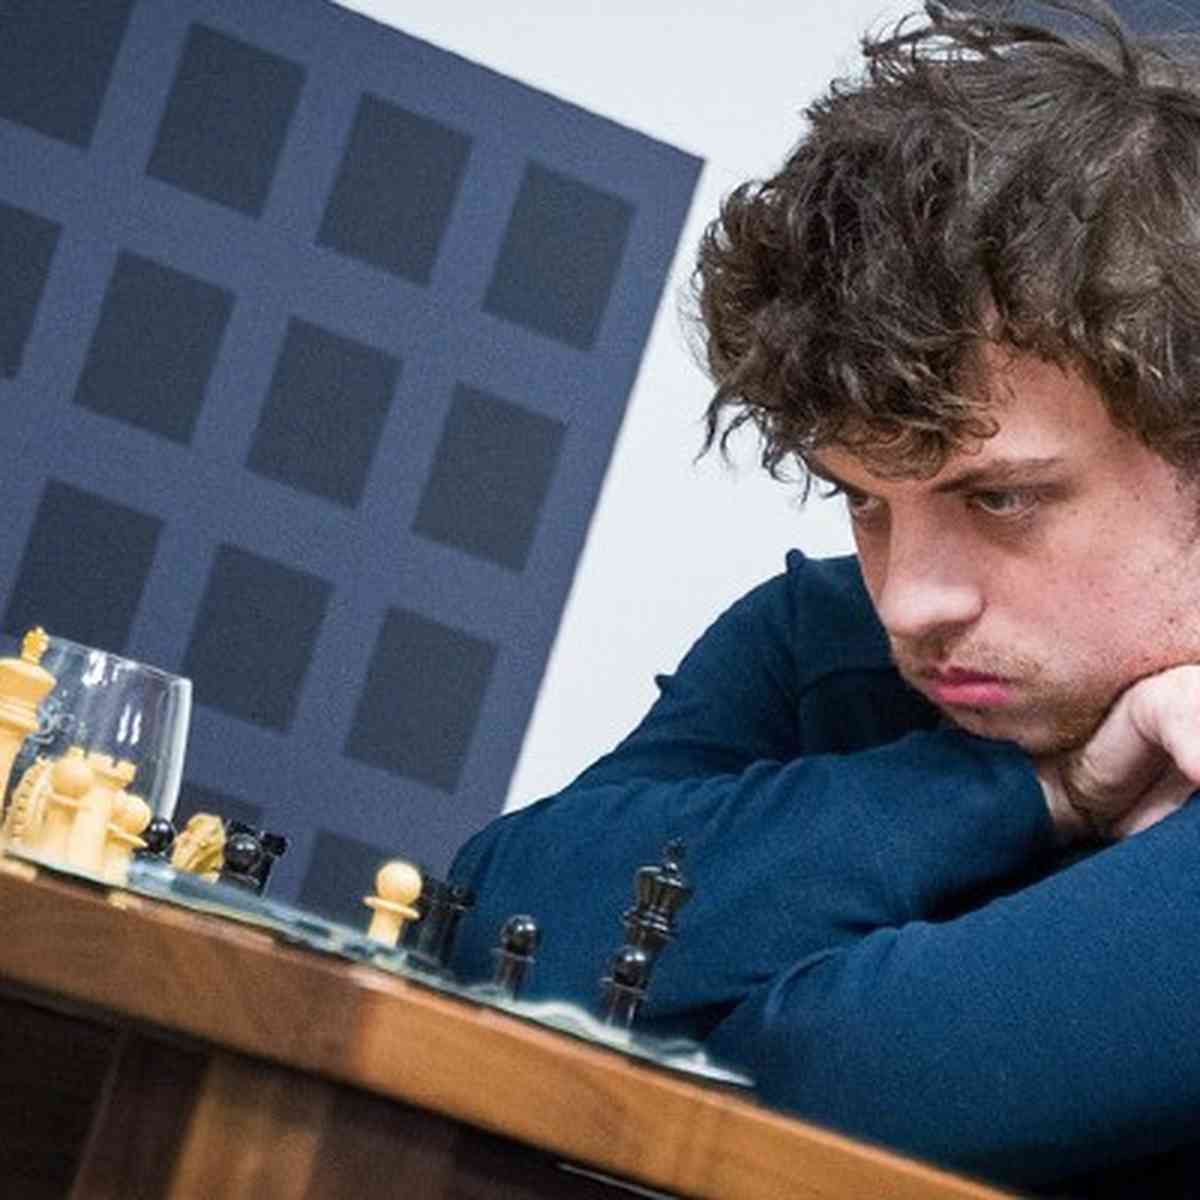 Chess Hotel  Jogue xadrez online